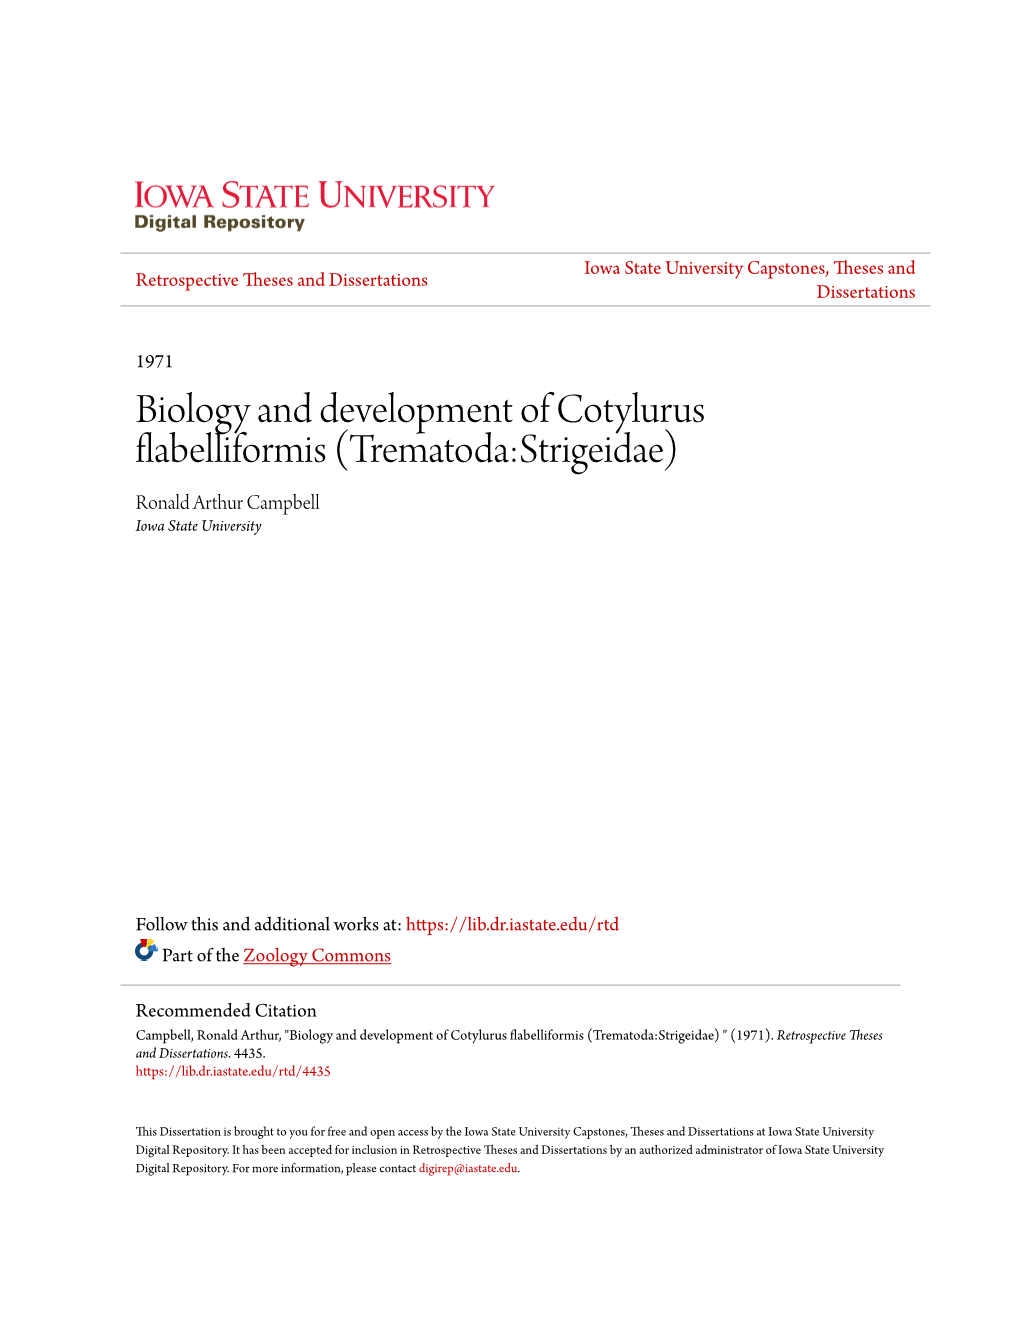 Biology and Development of Cotylurus Flabelliformis (Trematoda:Strigeidae) Ronald Arthur Campbell Iowa State University